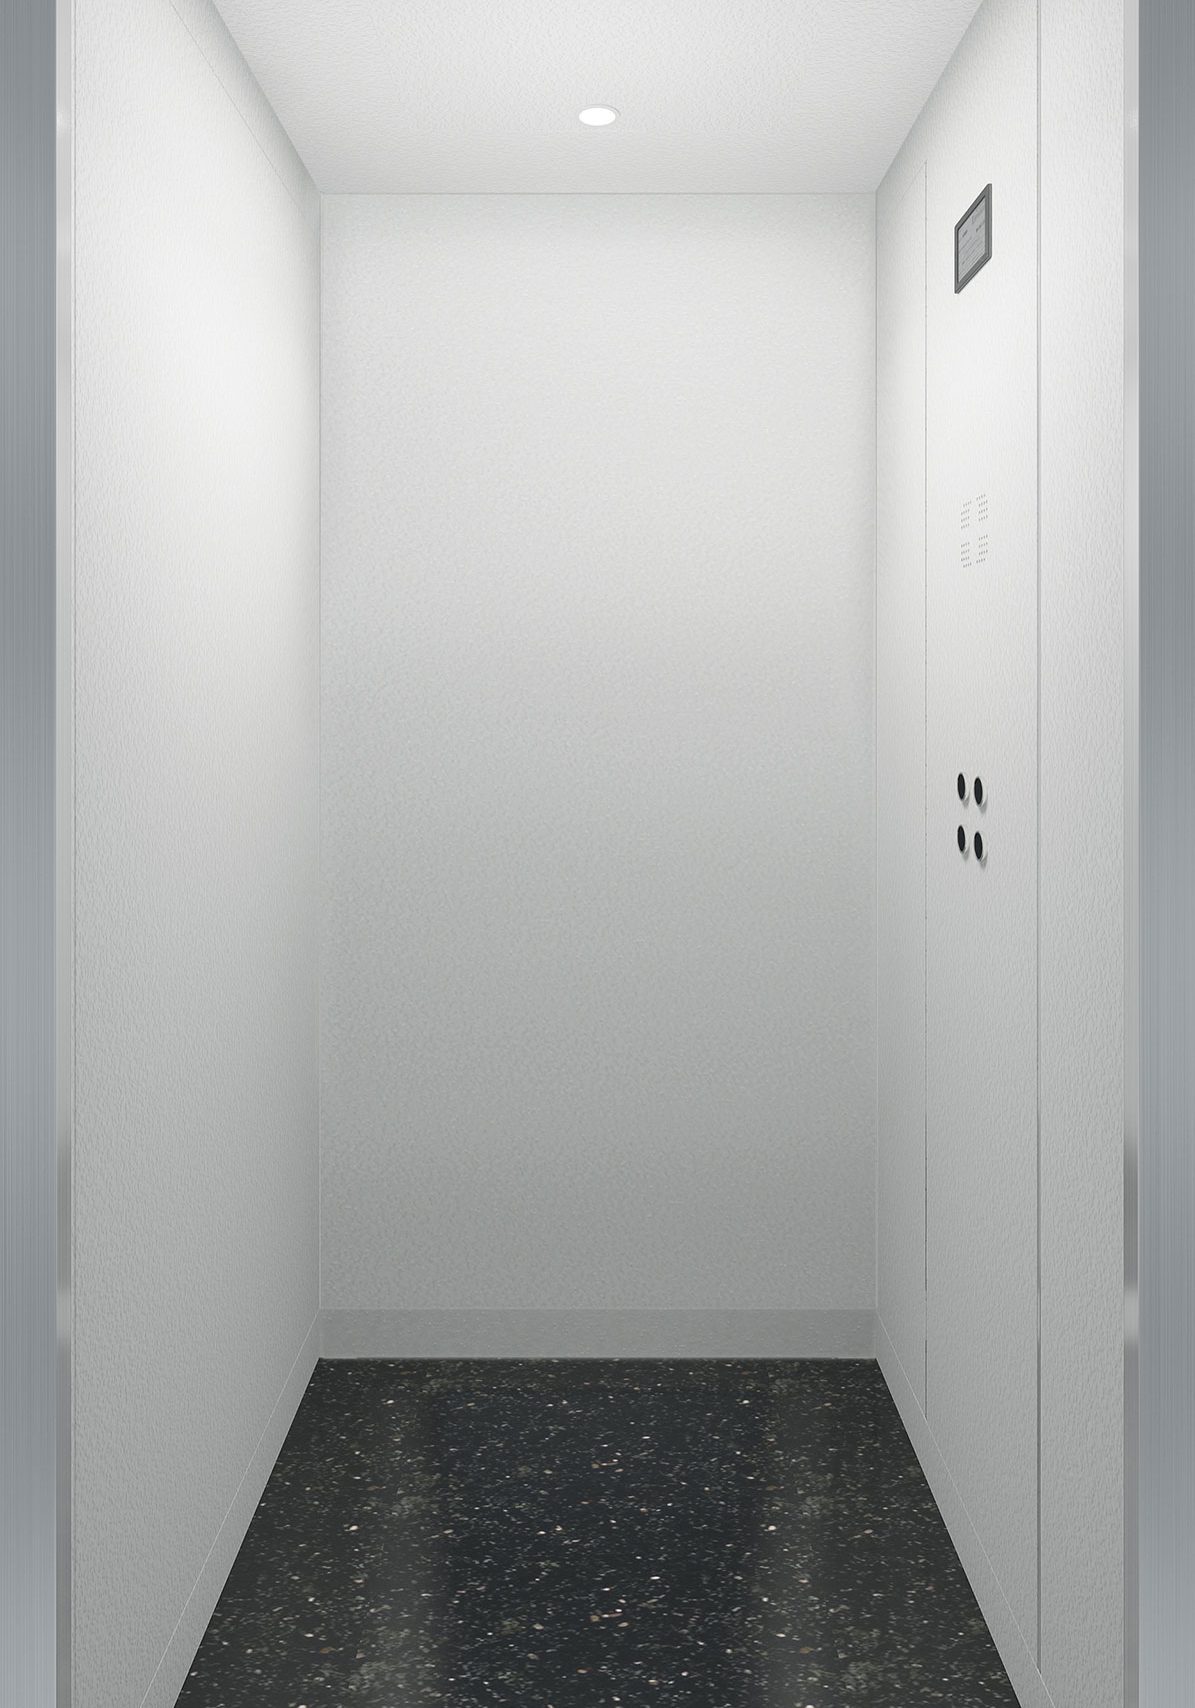 MC24729 Platinum Elevators Rerender vertical 3 variation 5 no mirror